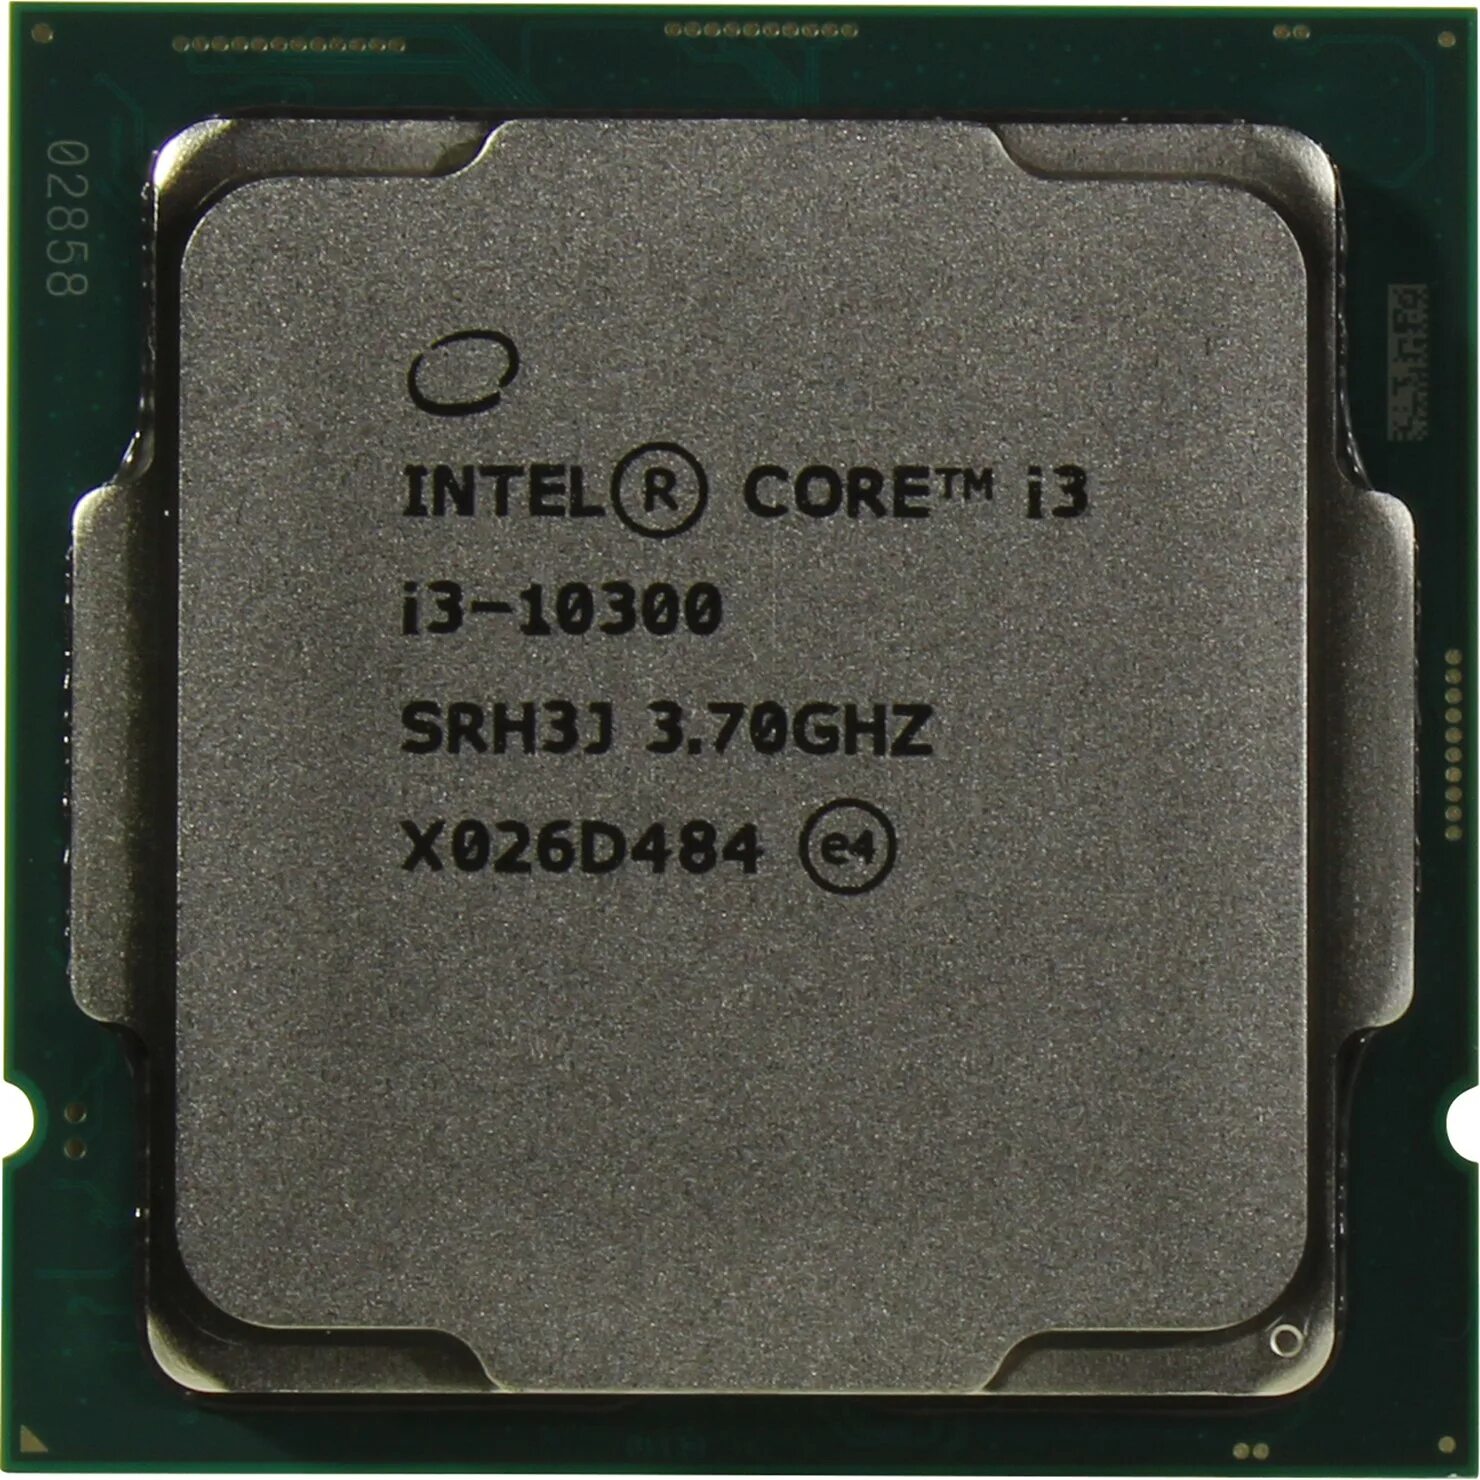 Процессор модели памяти. Intel Xeon e-2274g. Процессор Intel XEONE-2274g. Intel Core i3 10300. Intel cm8066201920404sr2l6.